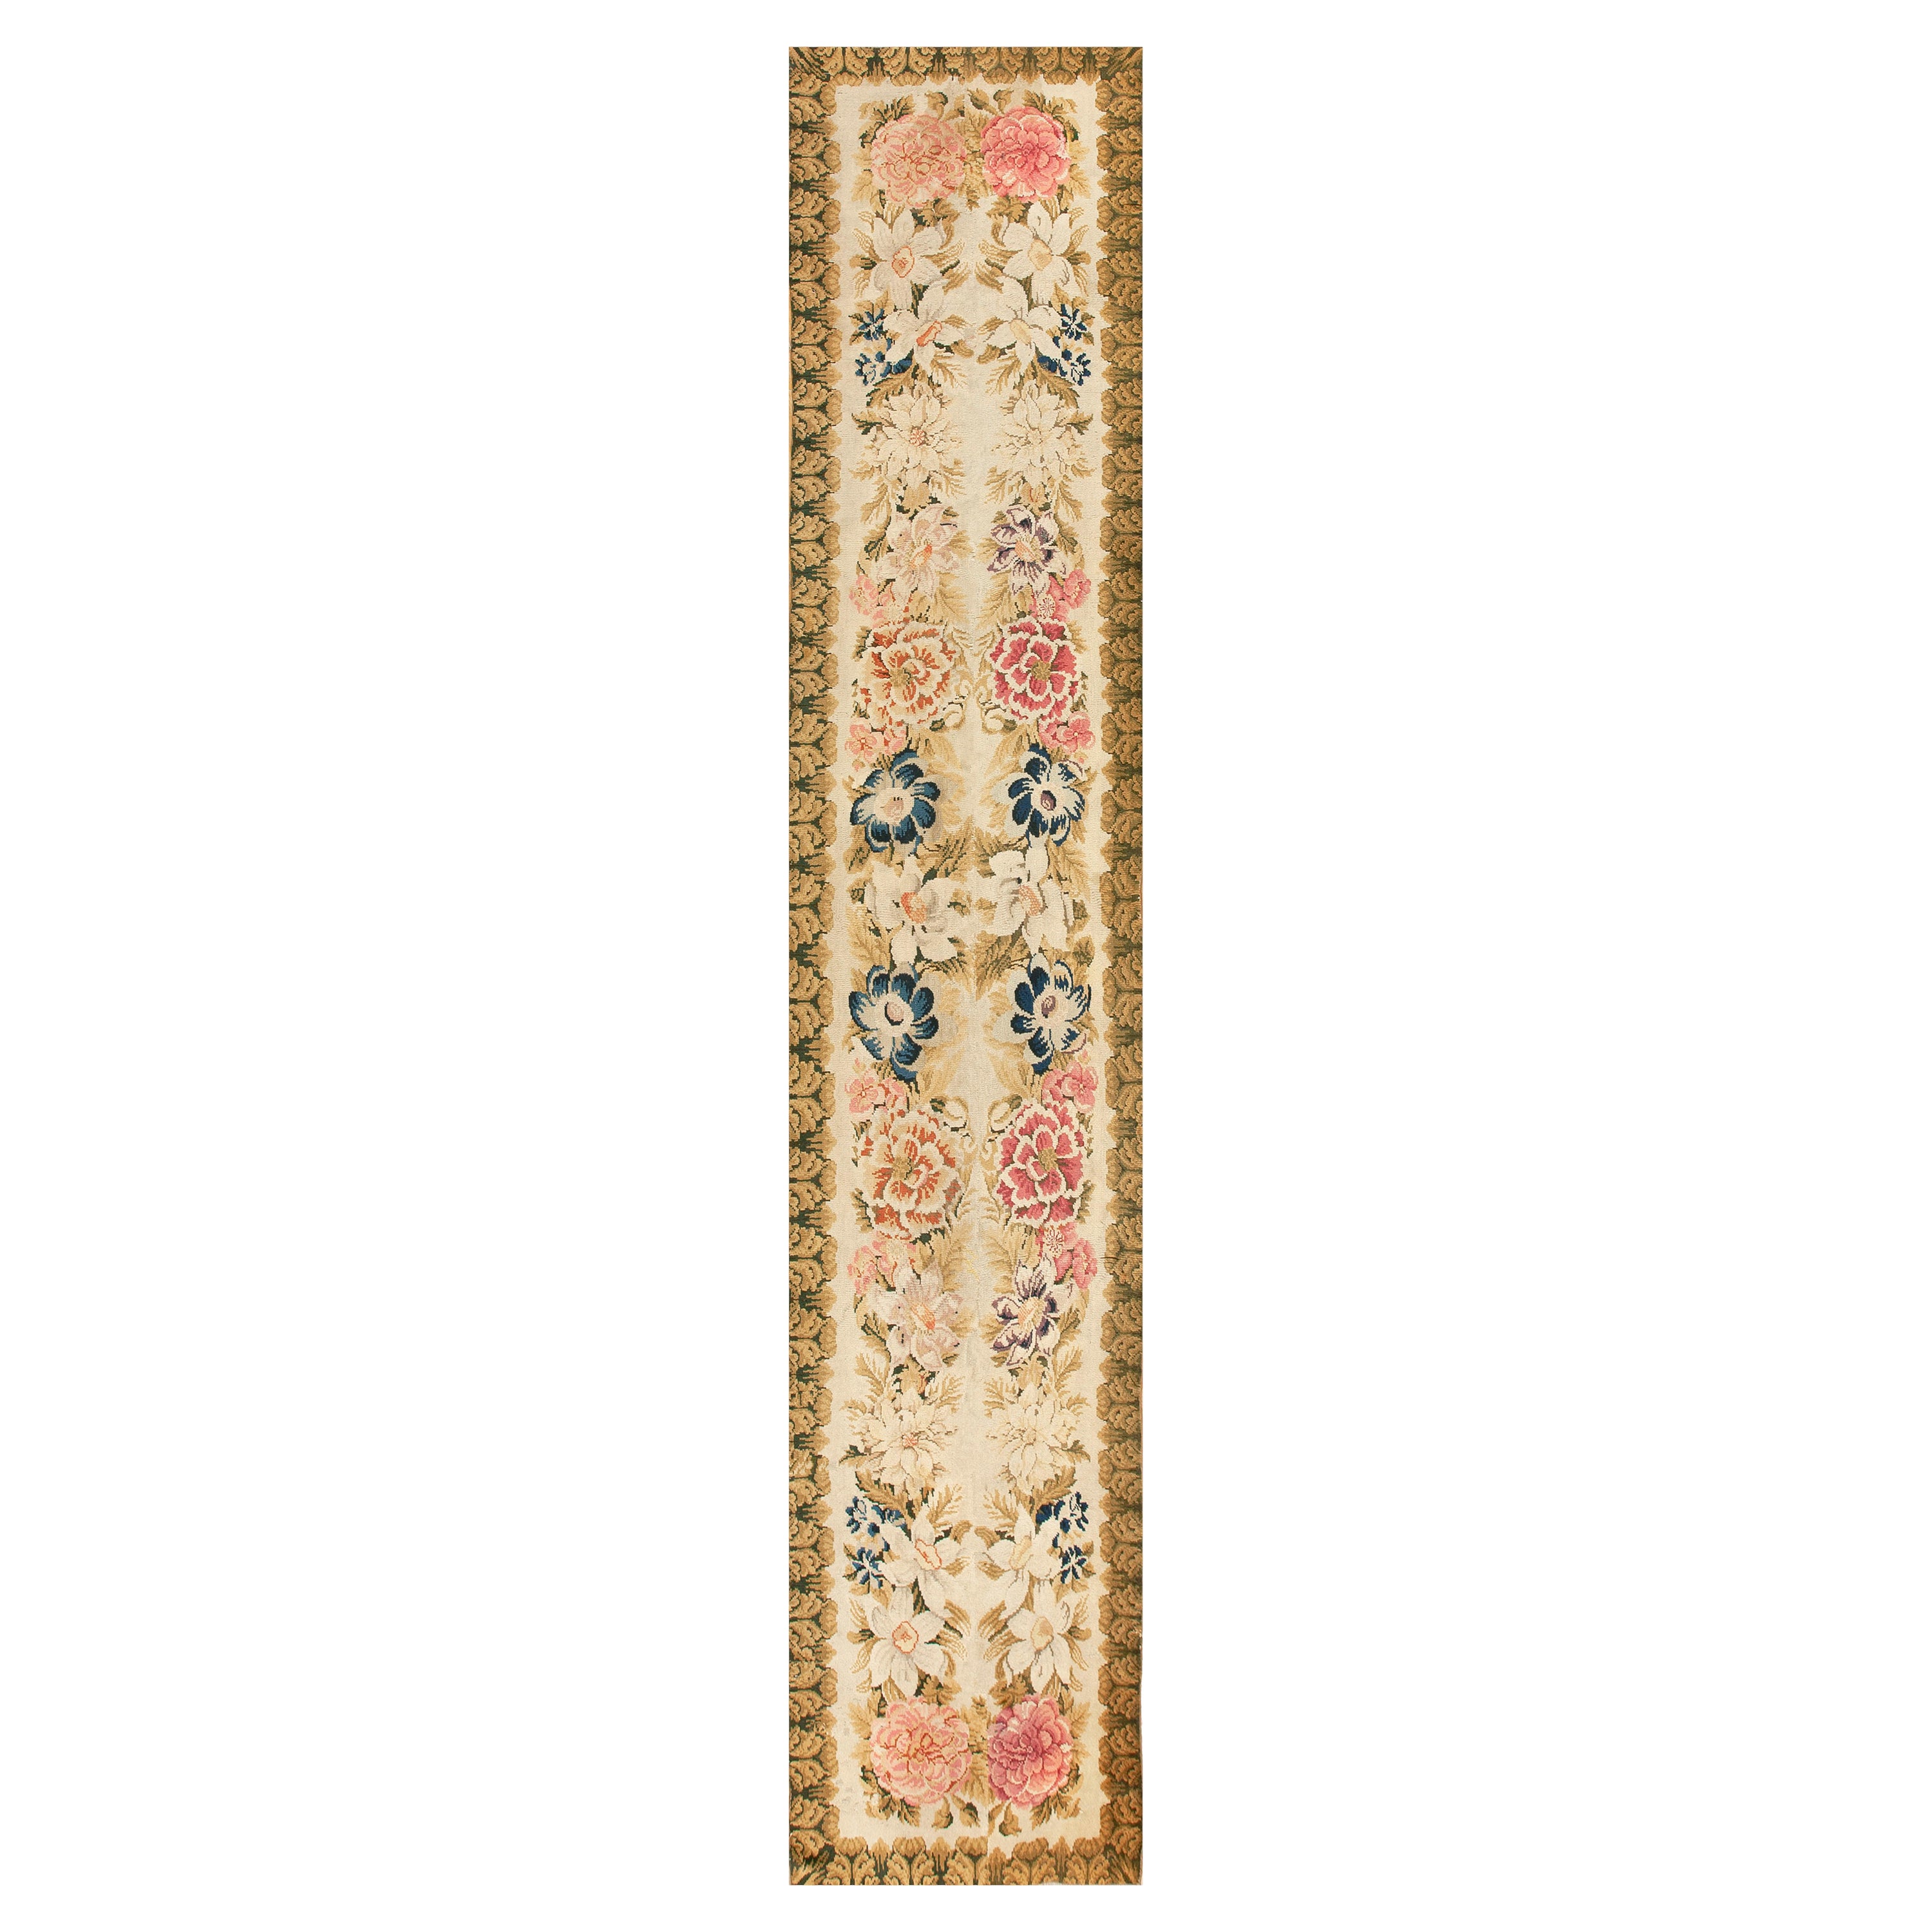 Mid 18th Century English Axminster Carpet ( 3'4" x 17'4" - 102 x 528 cm )